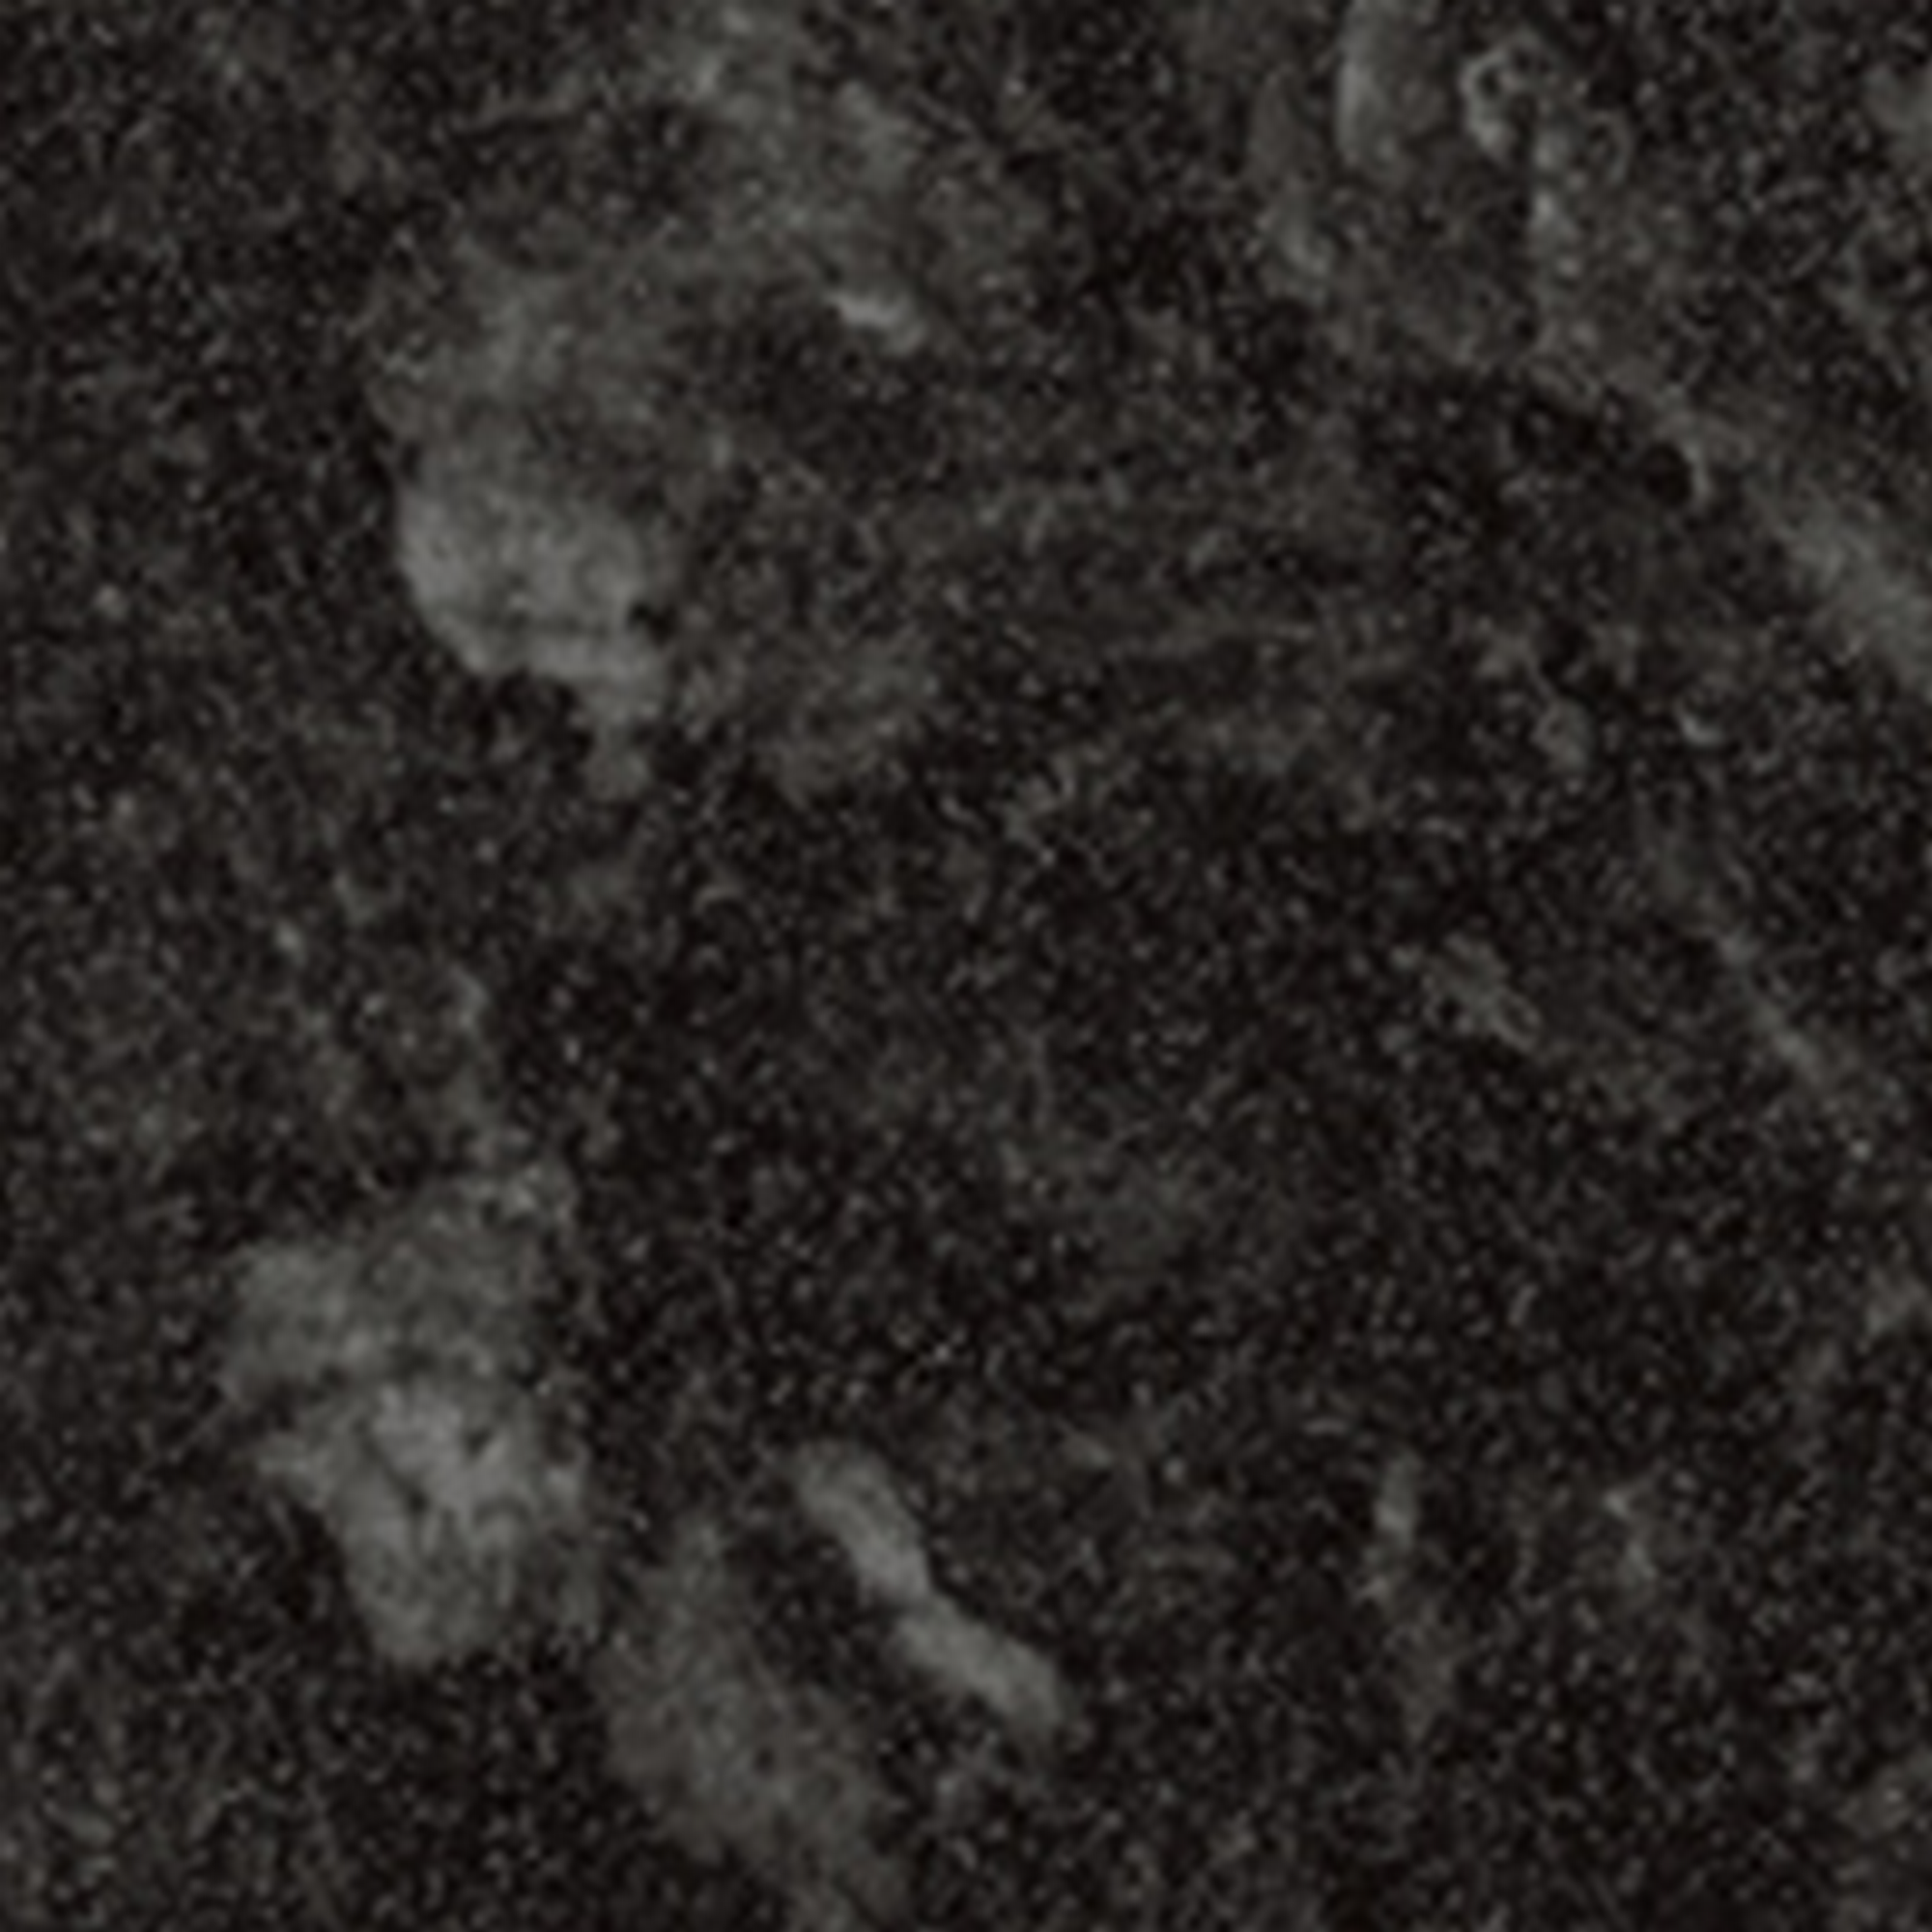 Küchenarbeitsplatte 'BT144 C' 2960 x 600 x 39 mm basalt poliert + product picture